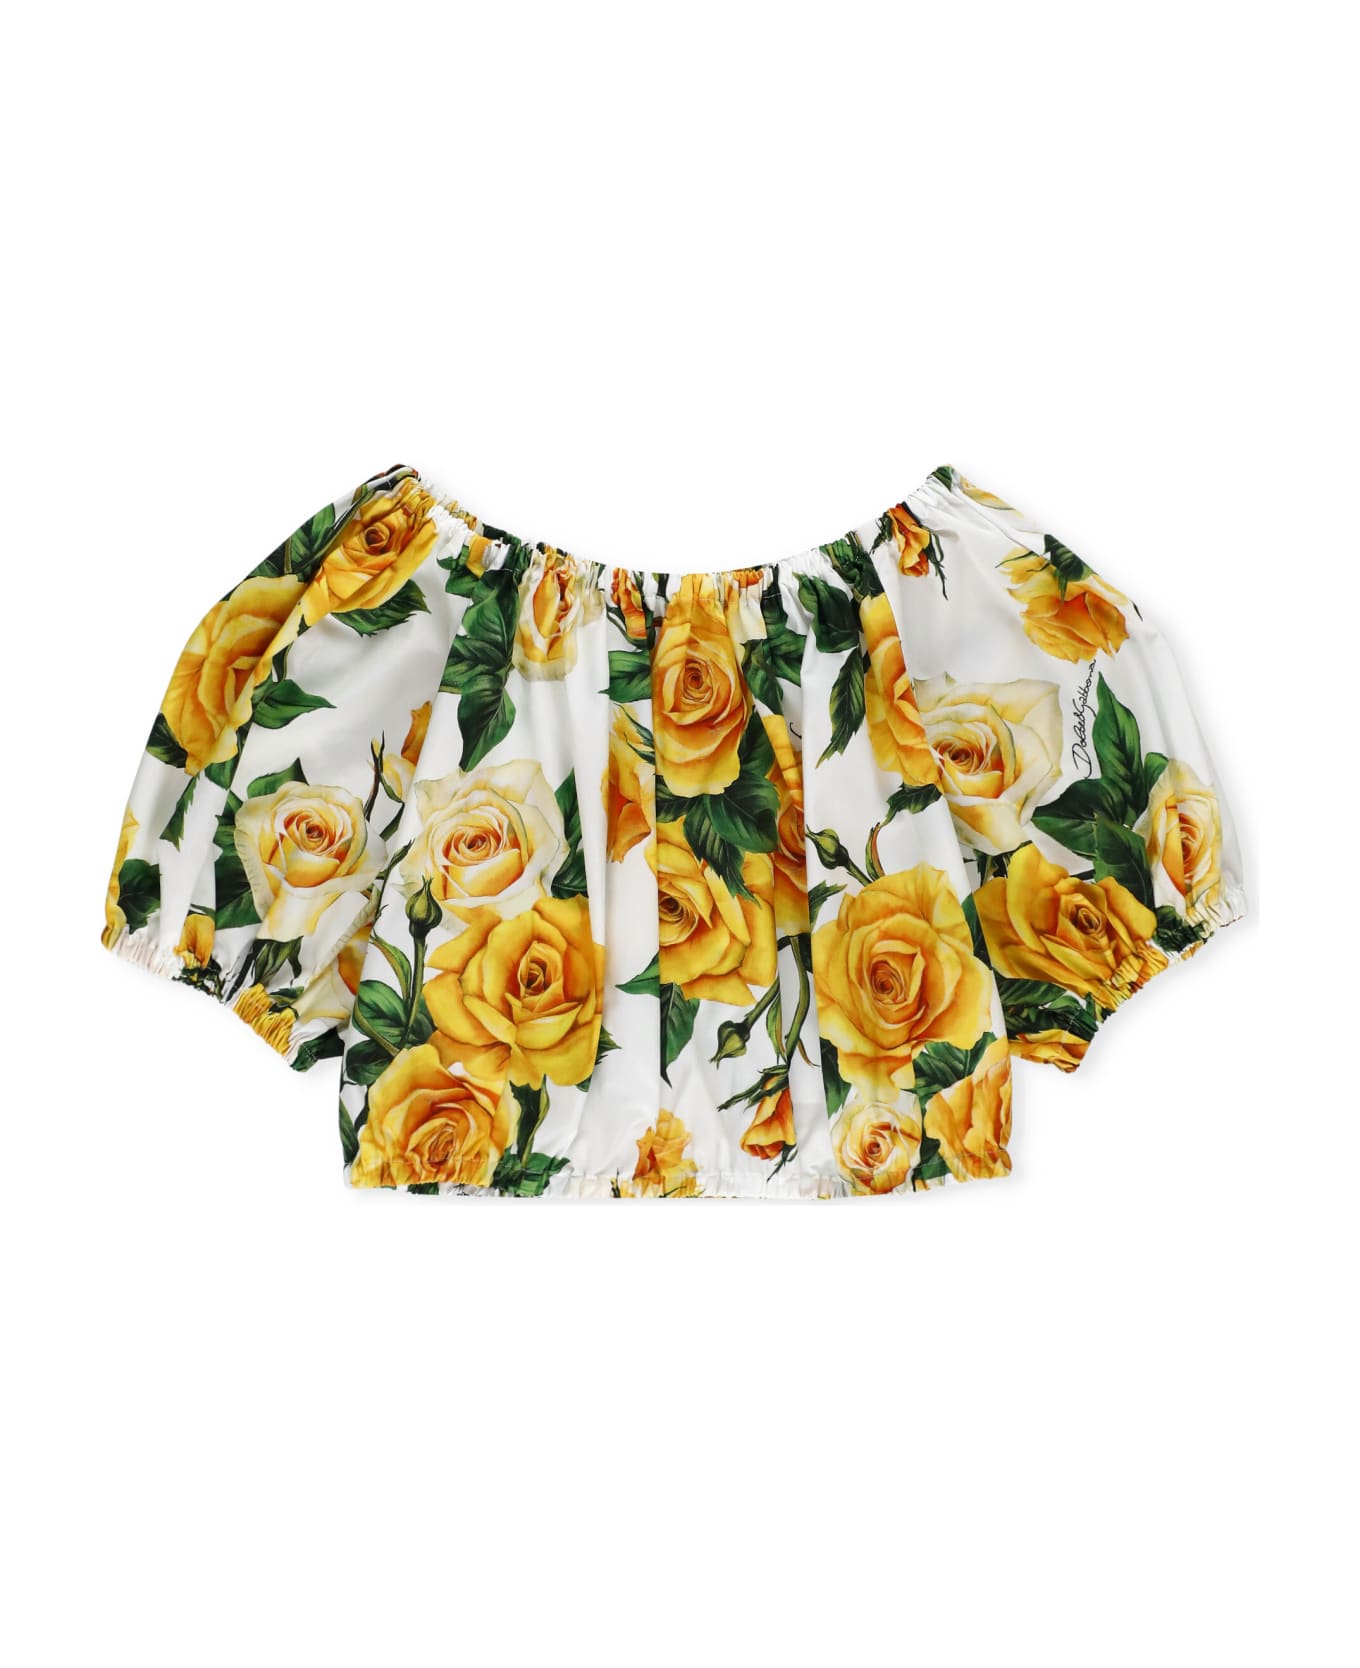 Dolce & Gabbana Flowering Blouse - Multicolore